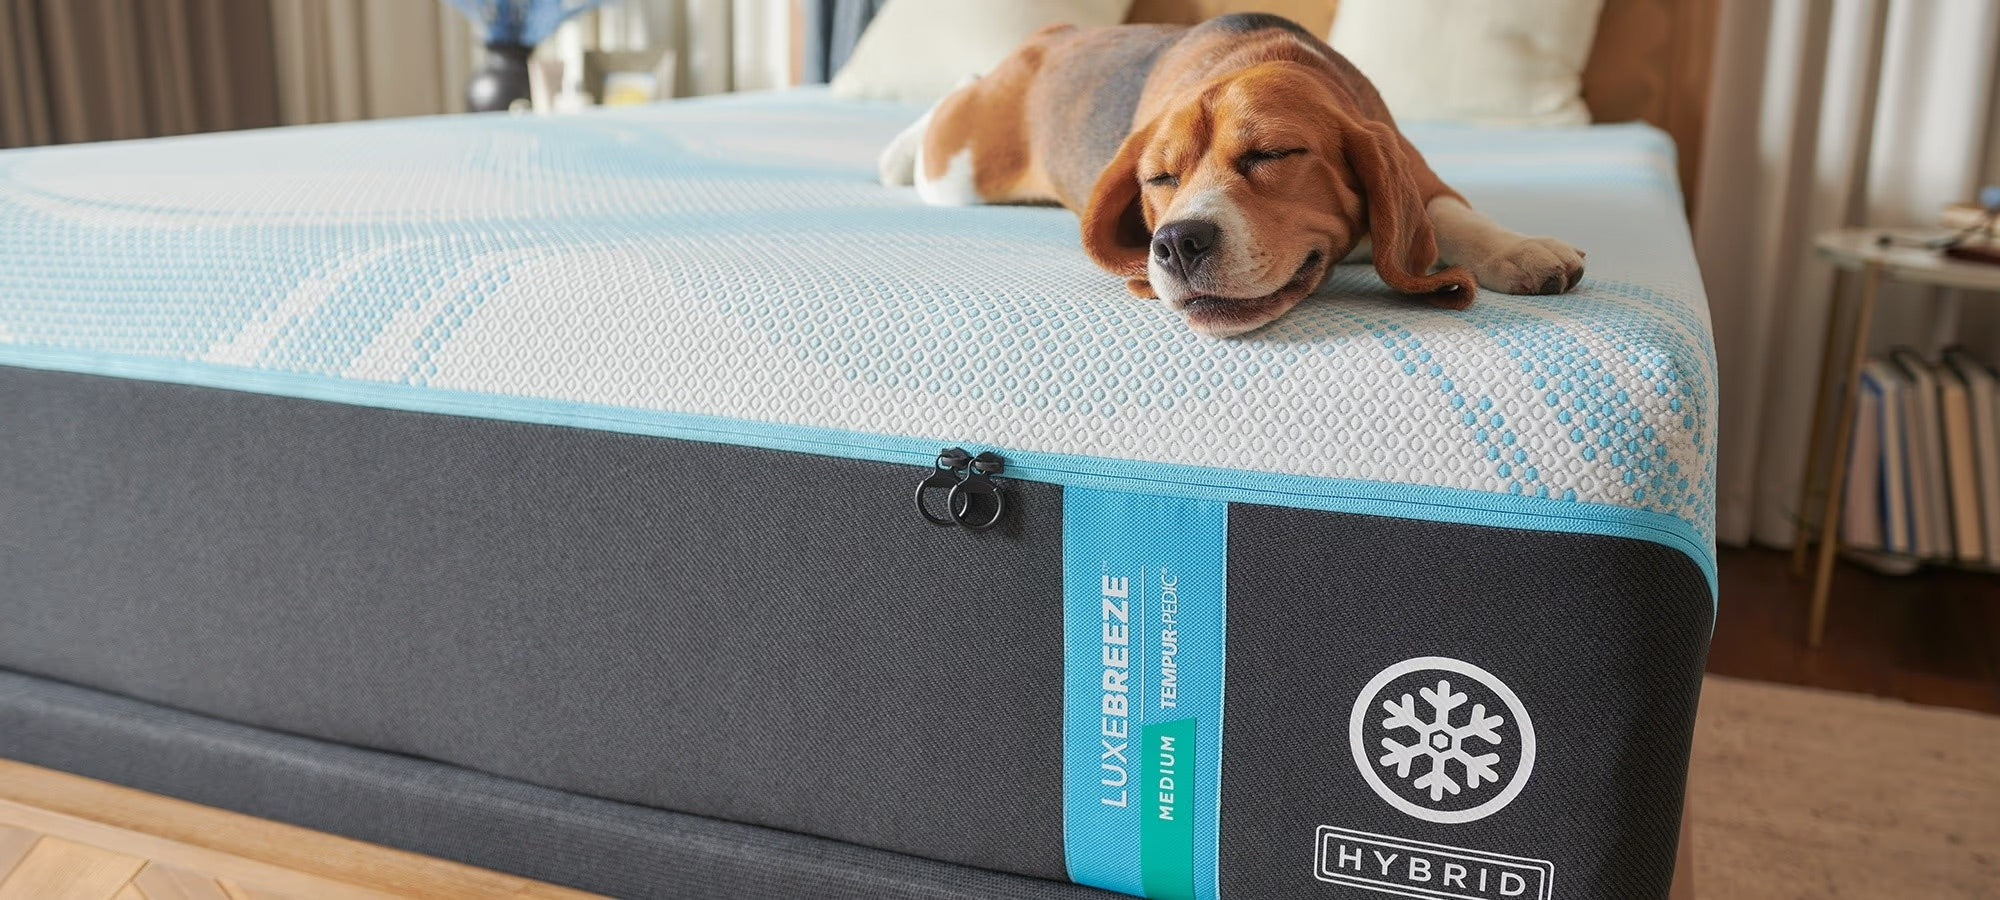 dog sleeping on luxebreeze hybrid mattress from tempurpedic